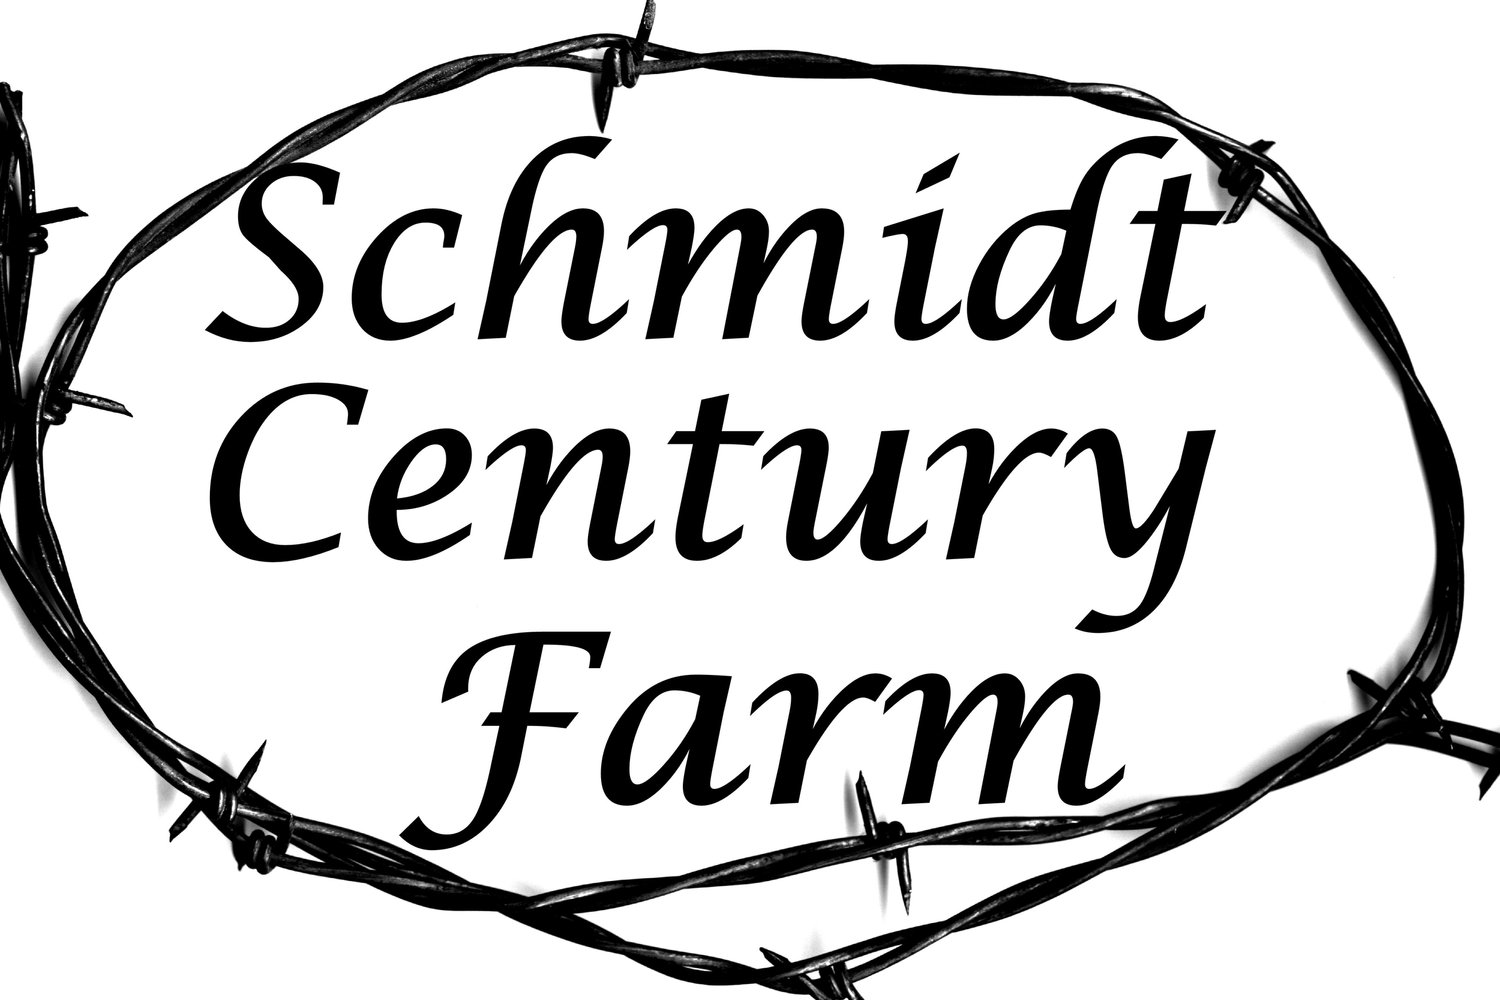 schmidtcenturyfarm.com